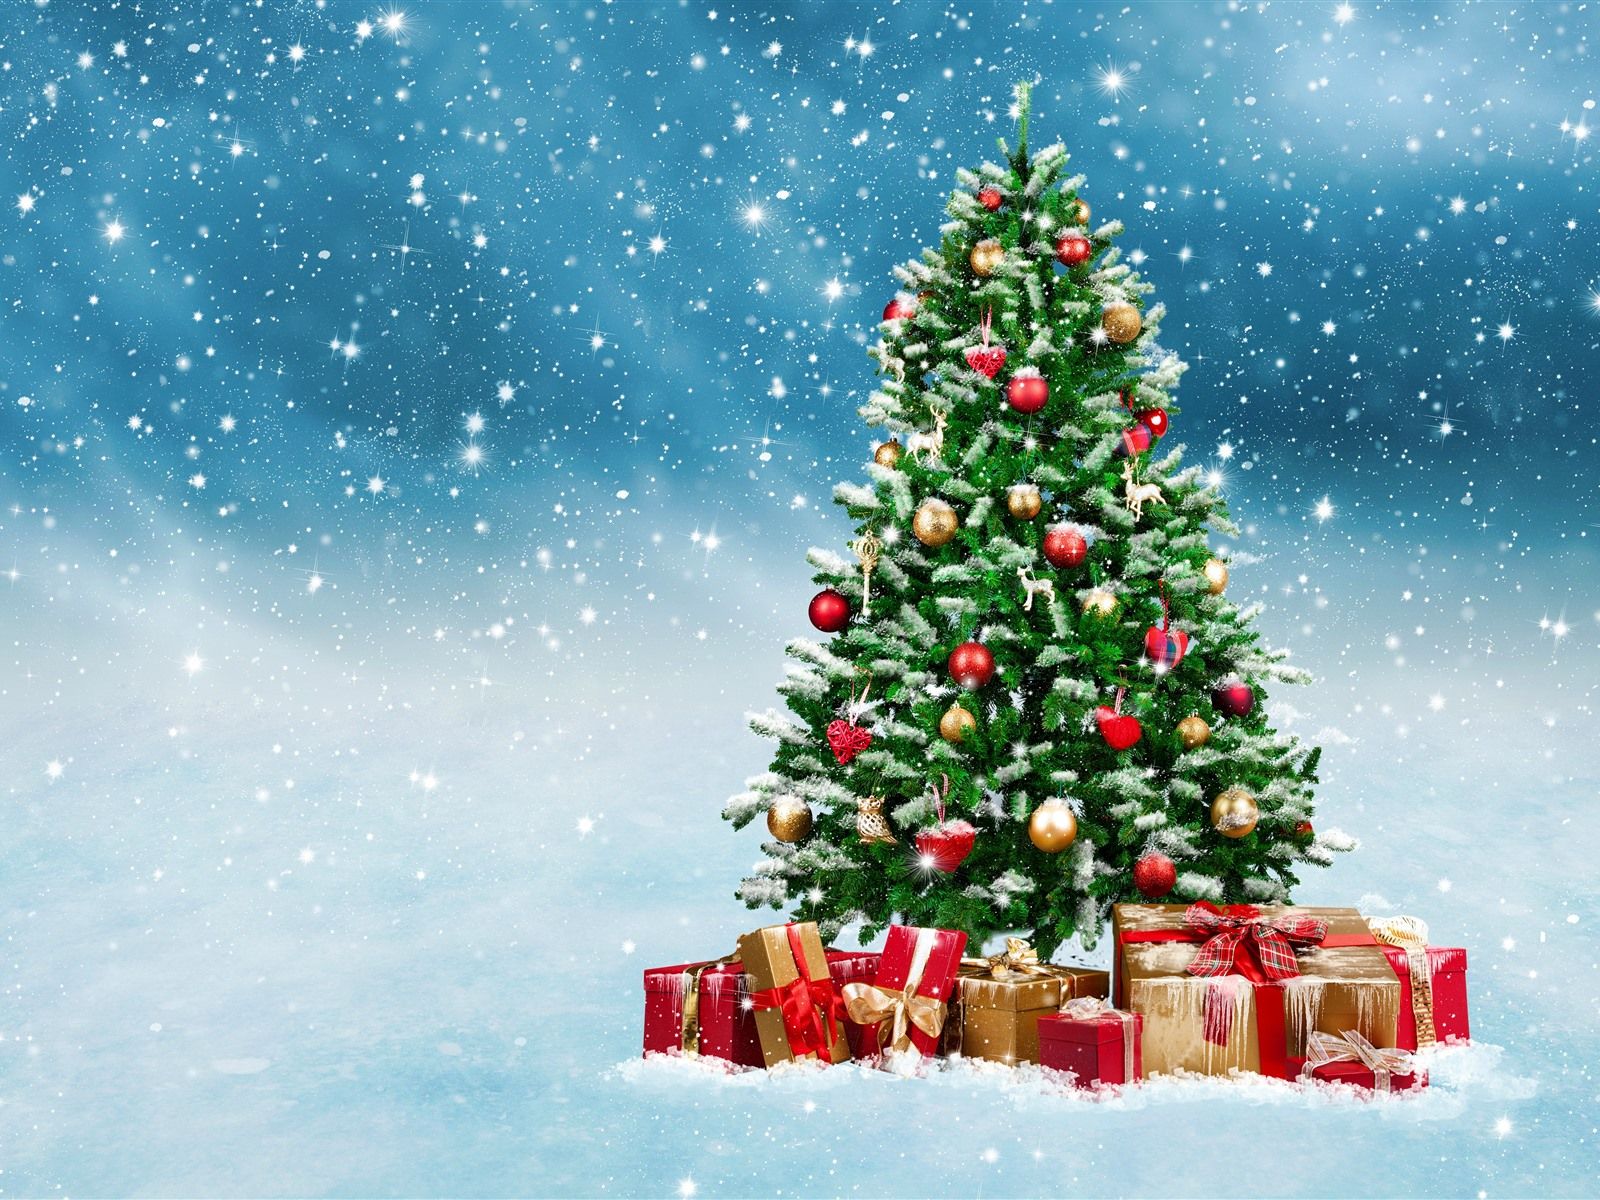 Wallpaper Christmas tree, gifts, balls, snowflakes, snow, shine 5120x2880 UHD 5K Picture, Image